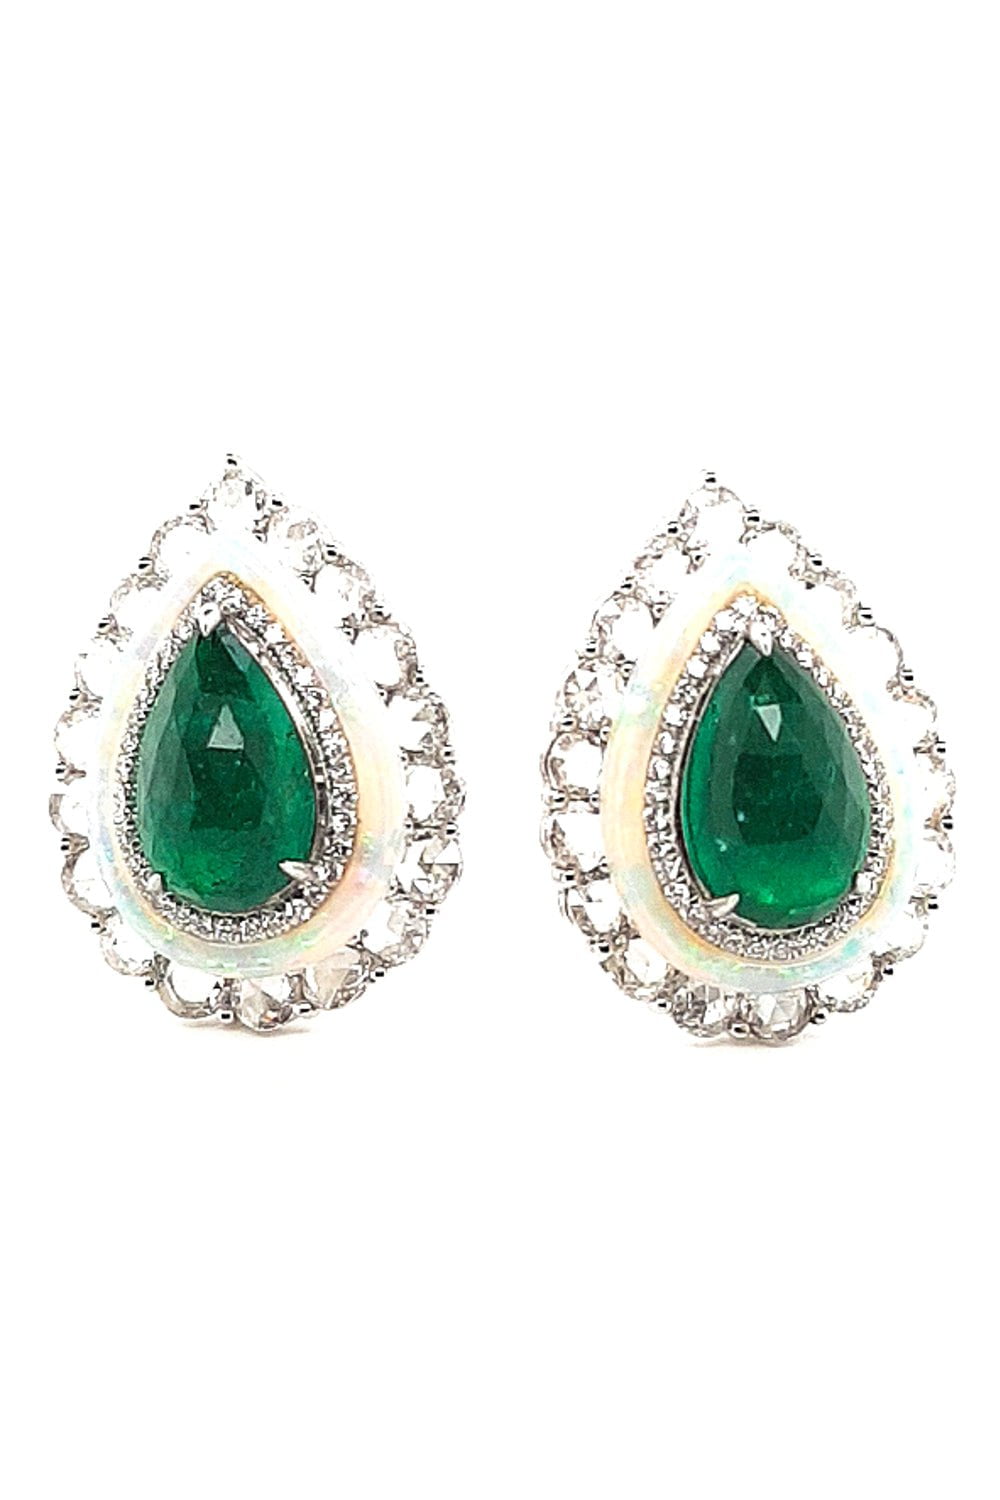 SABOO FINE JEWELS-Emerald Rosecut Carved Opal Earrings-WHITE GOLD